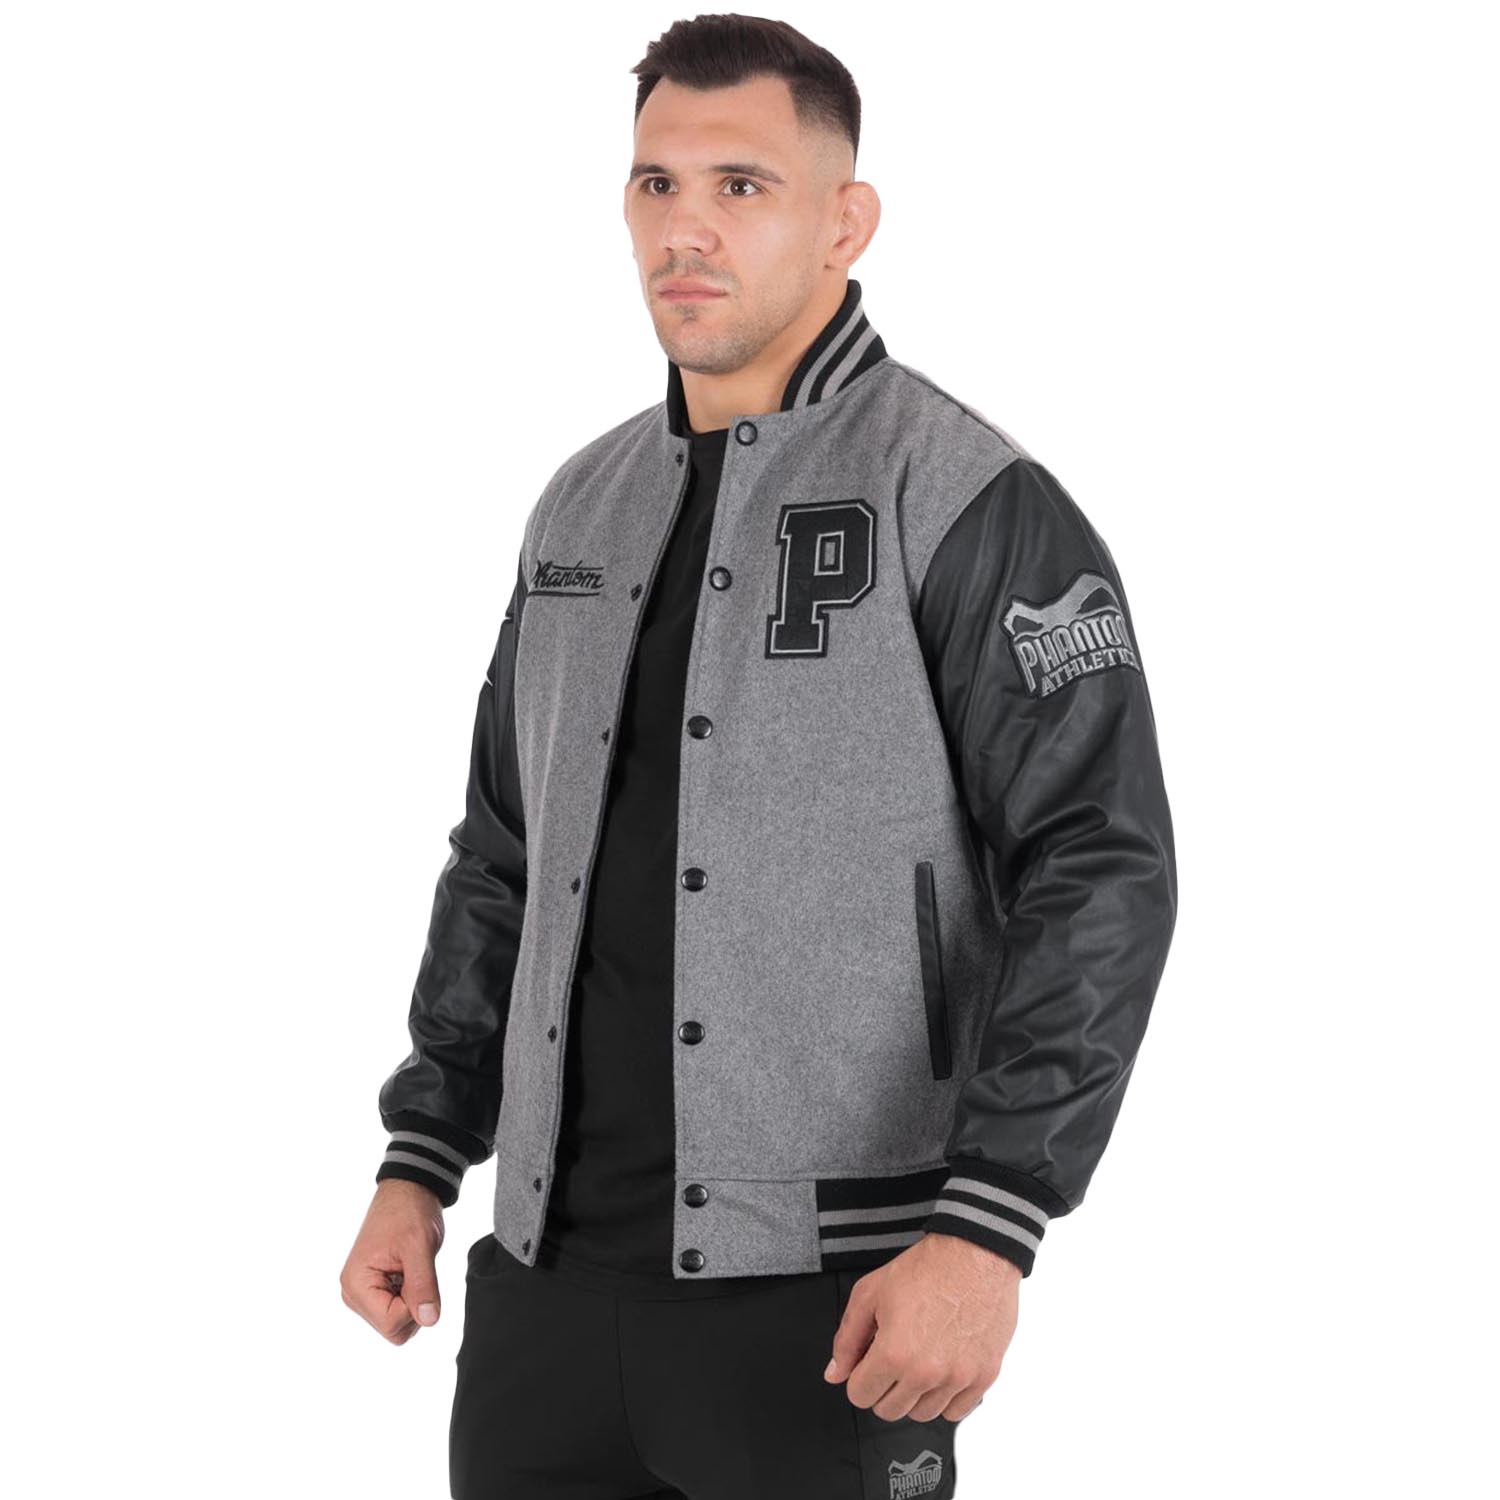 Phantom Athletics Jacket, Destroyer, grey-black, S